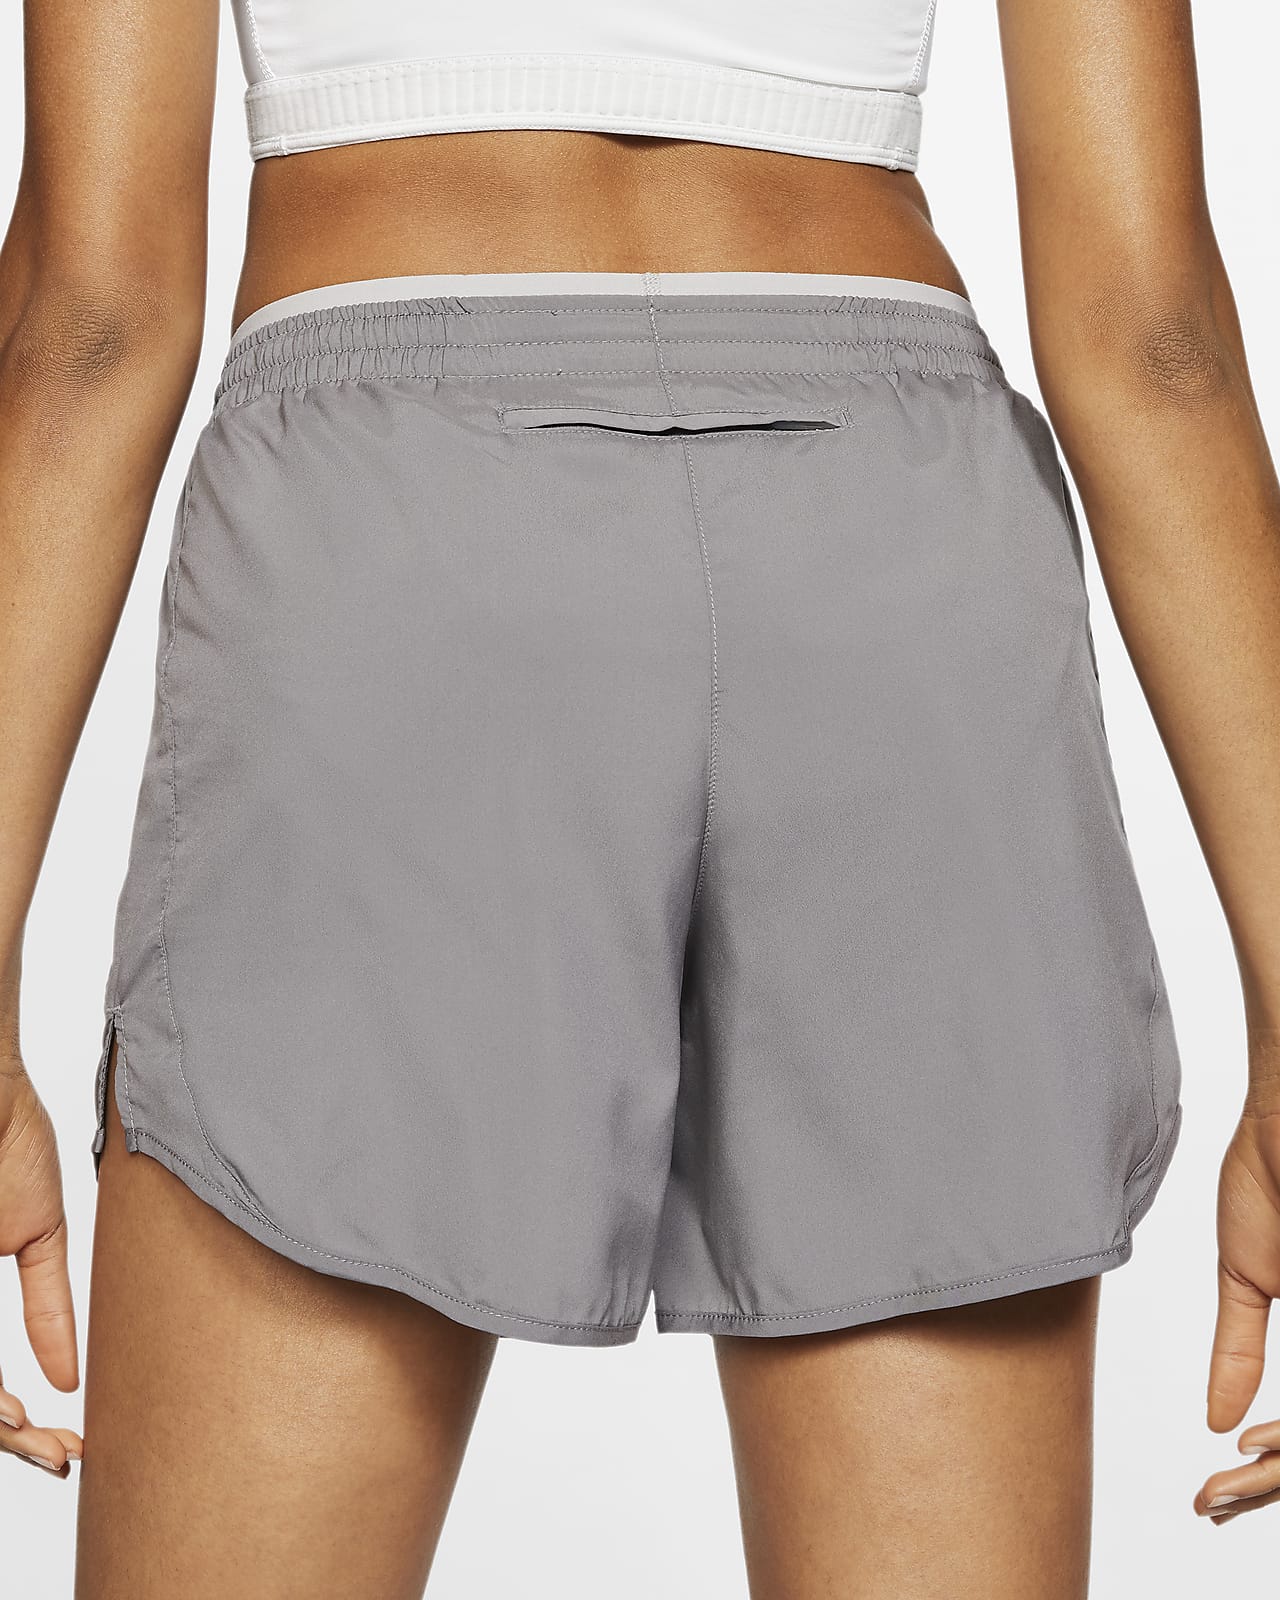 light grey nike shorts womens